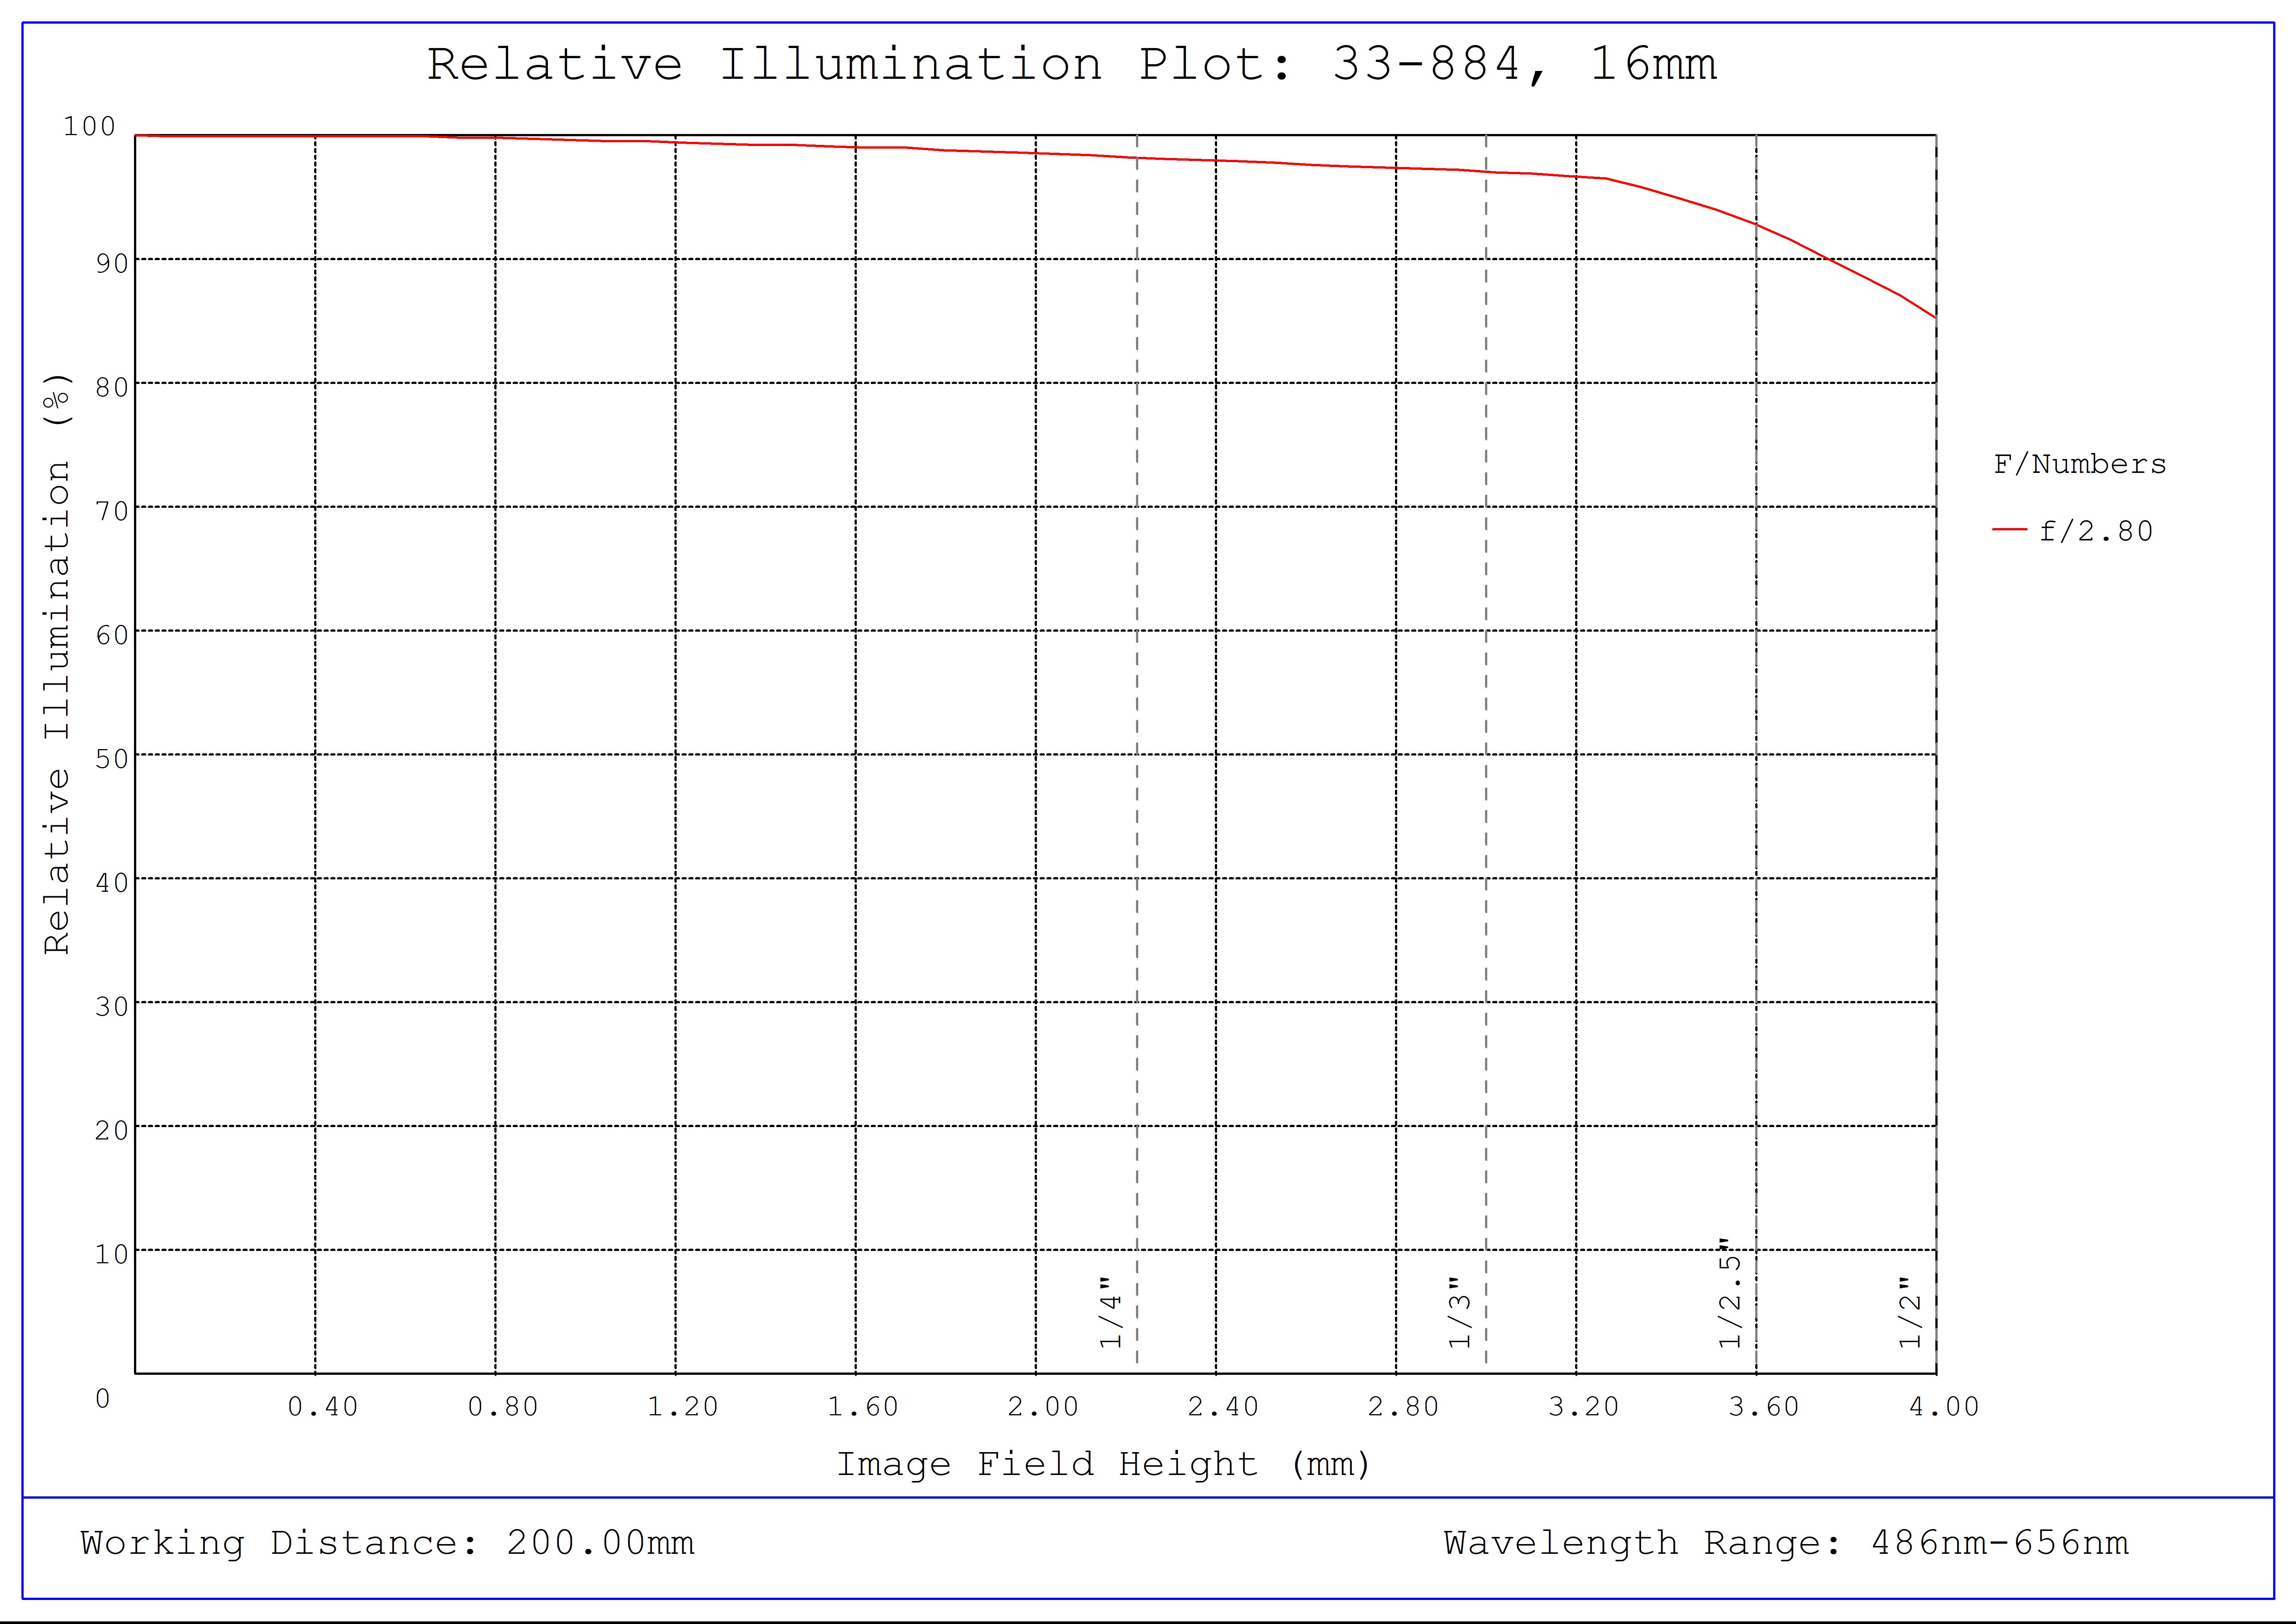 #33-884, 16mm, f/2.8 UCi Series Fixed Focal Length Lens, Relative Illumination Plot